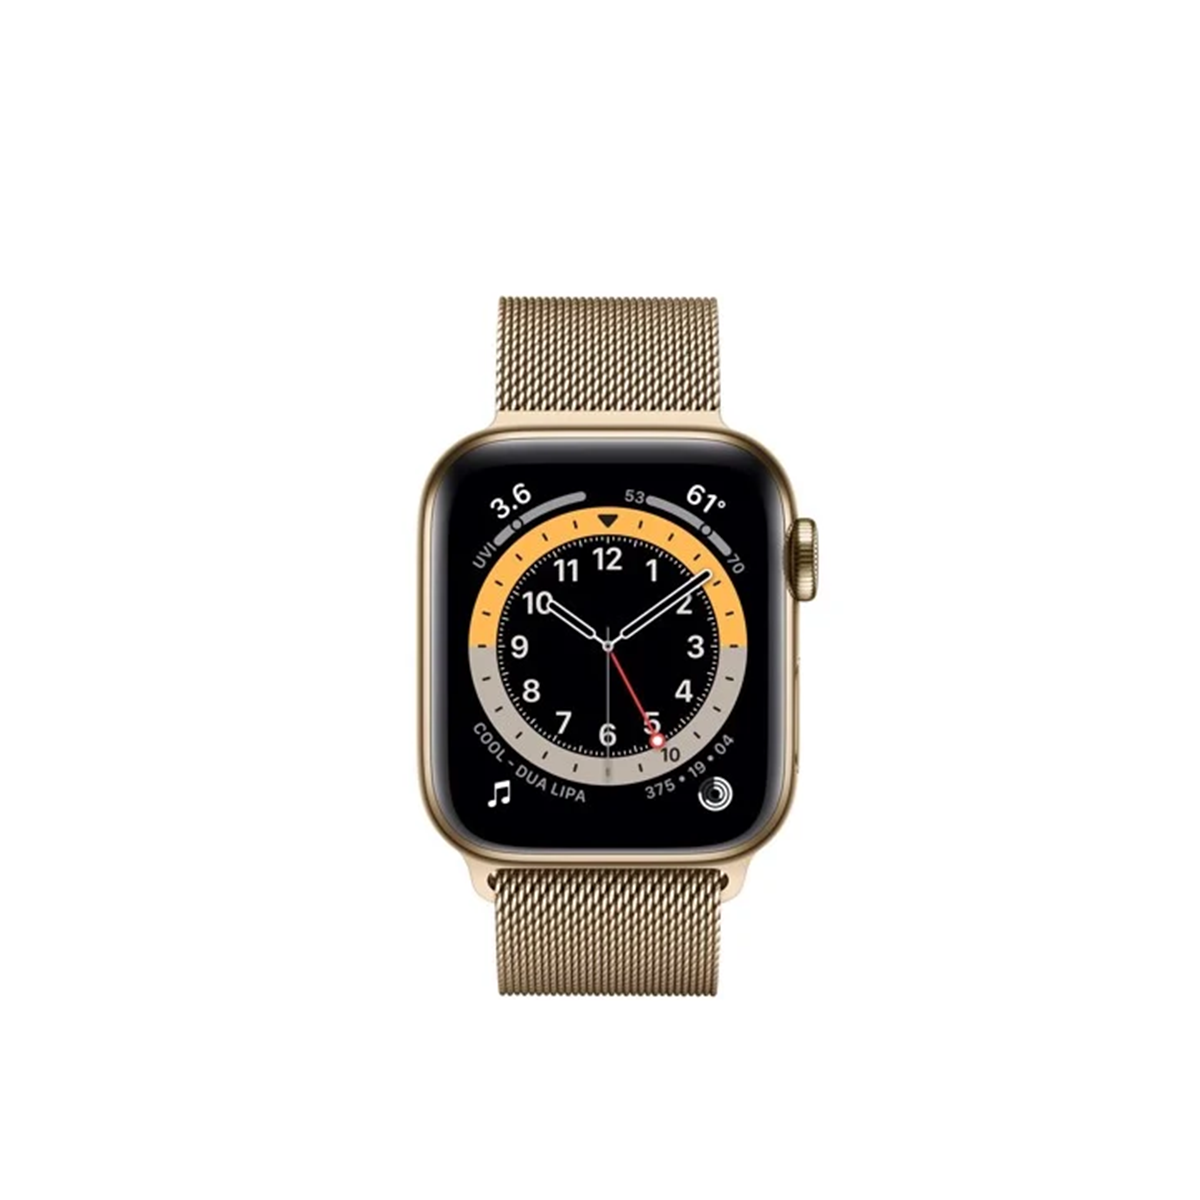  Apple Watch Series 6 Stainless Steel 